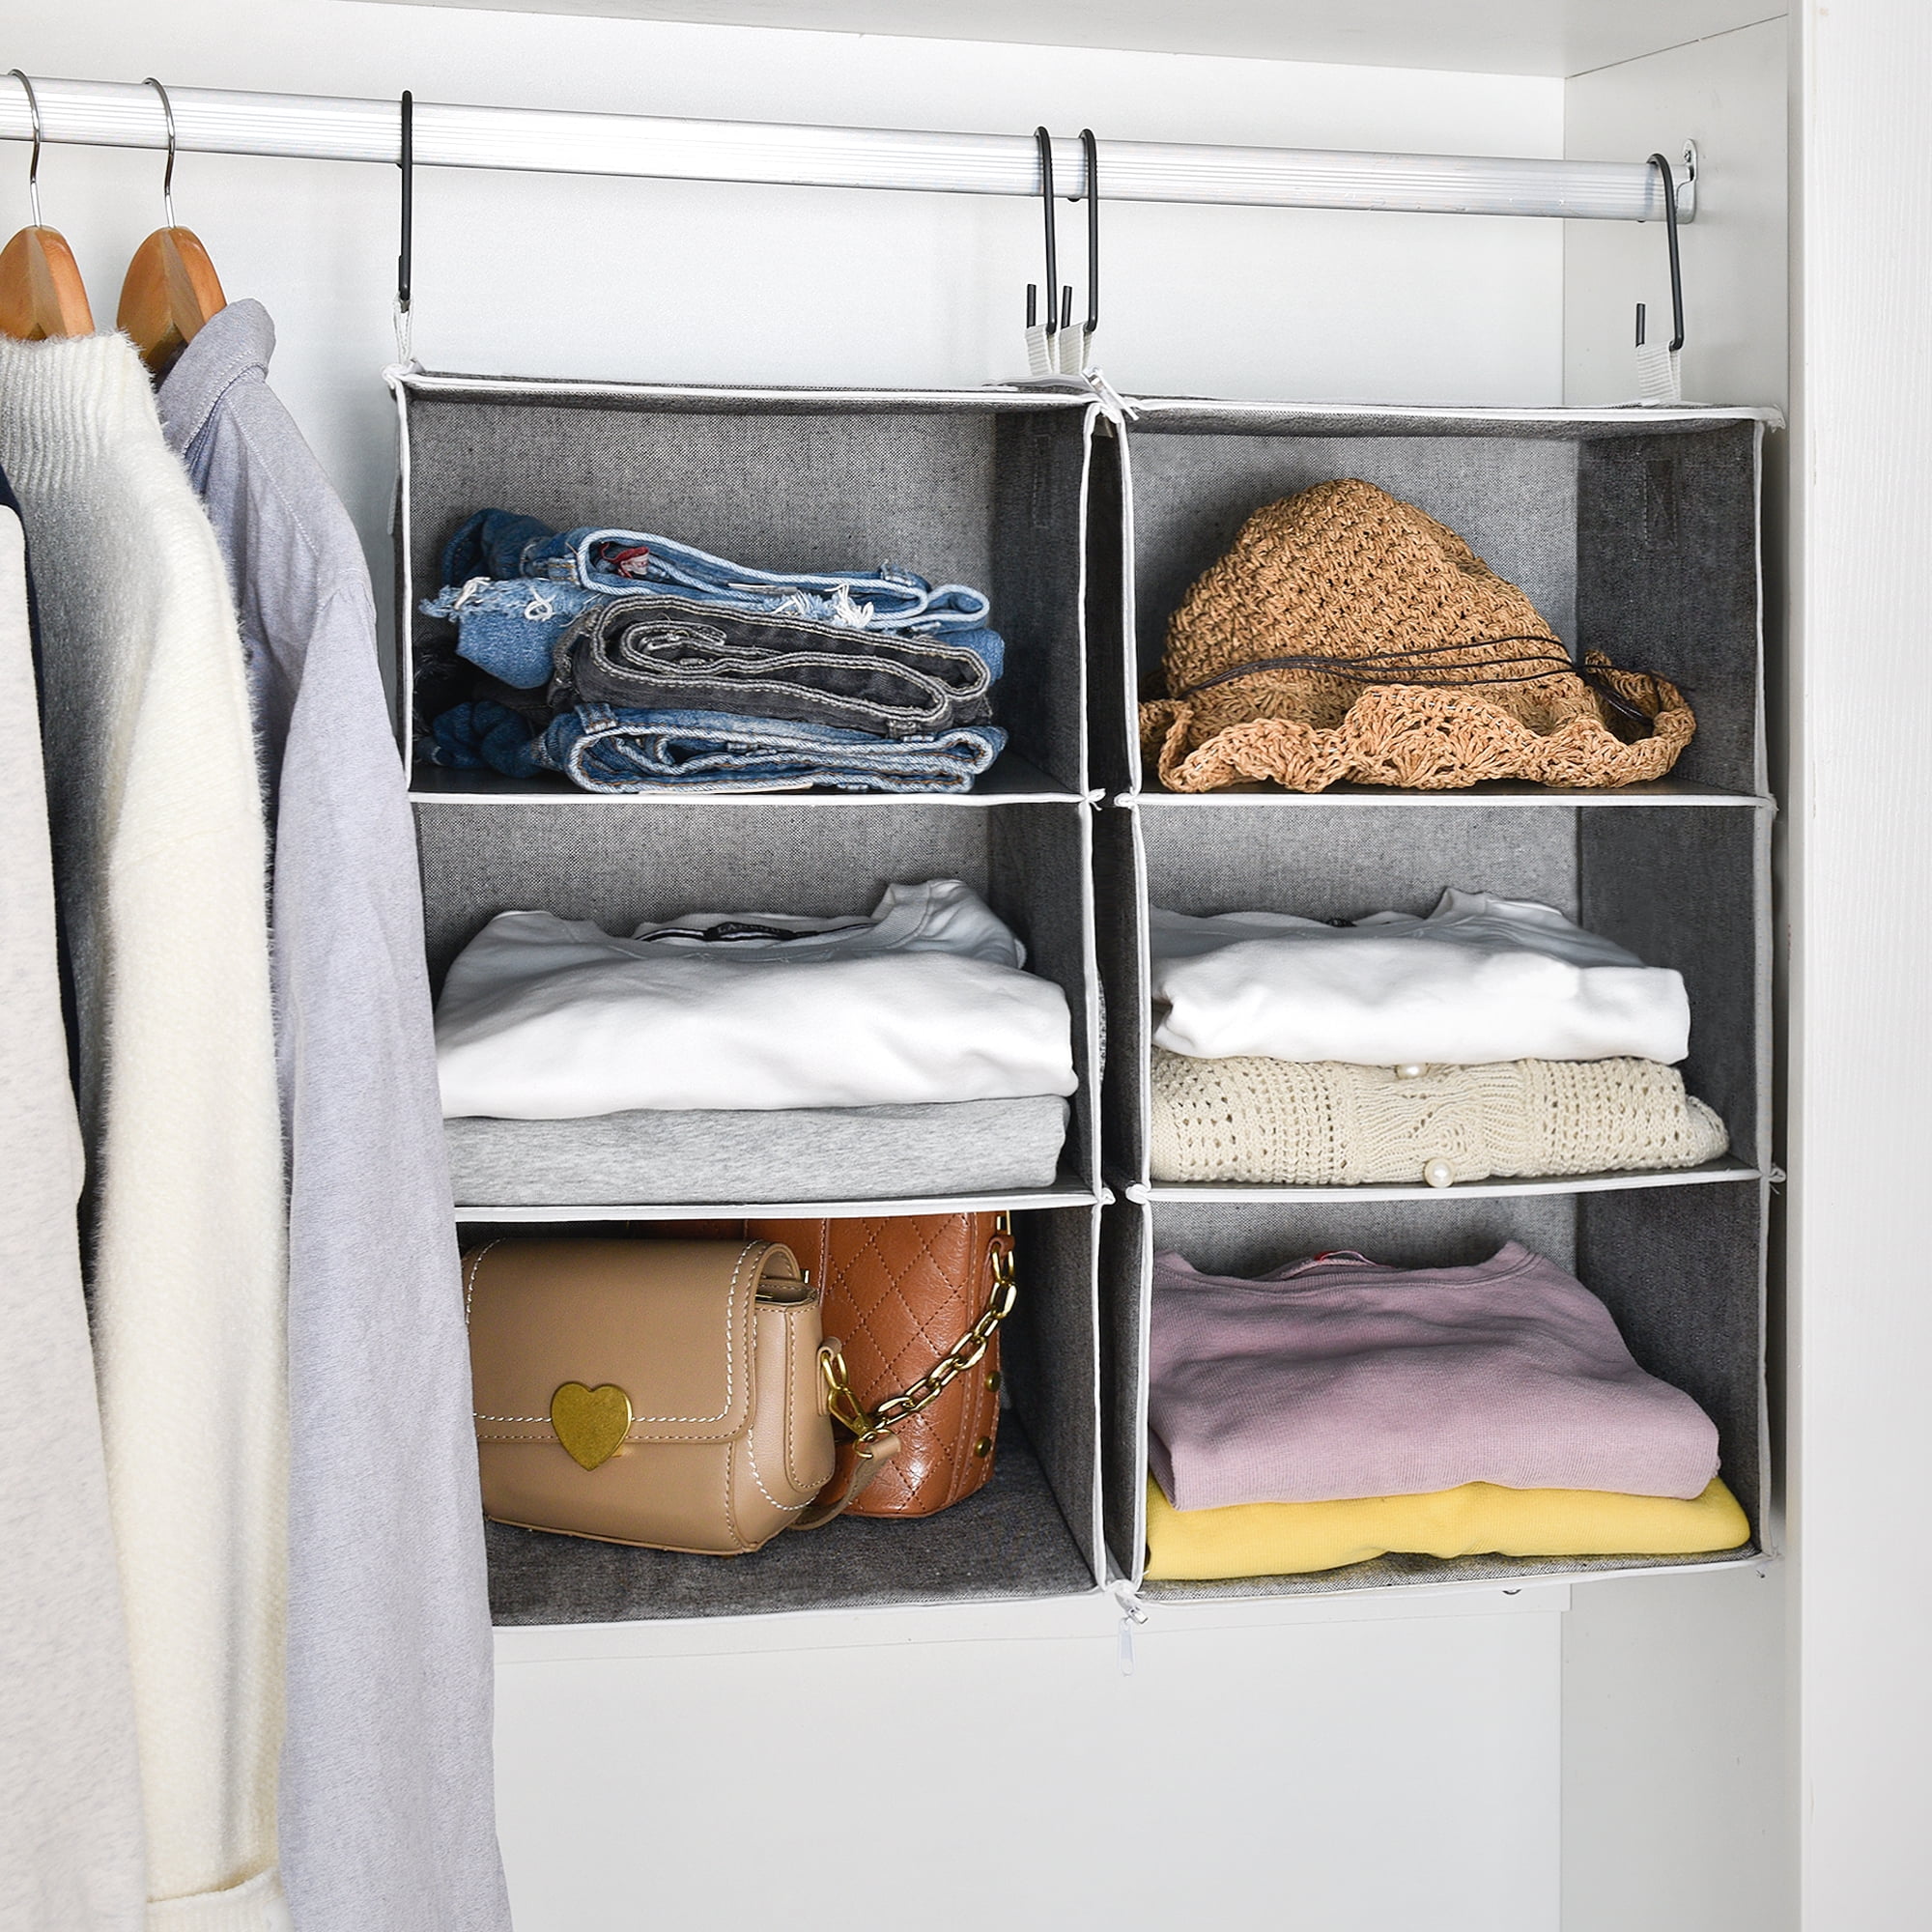 StorageWorks Fabric Hanging Closet Organizer, 6-Shelf Hanging Storage Organizer, Gray, 12 inchx12 inchx42 inch, Size: 12 x 12 x 42